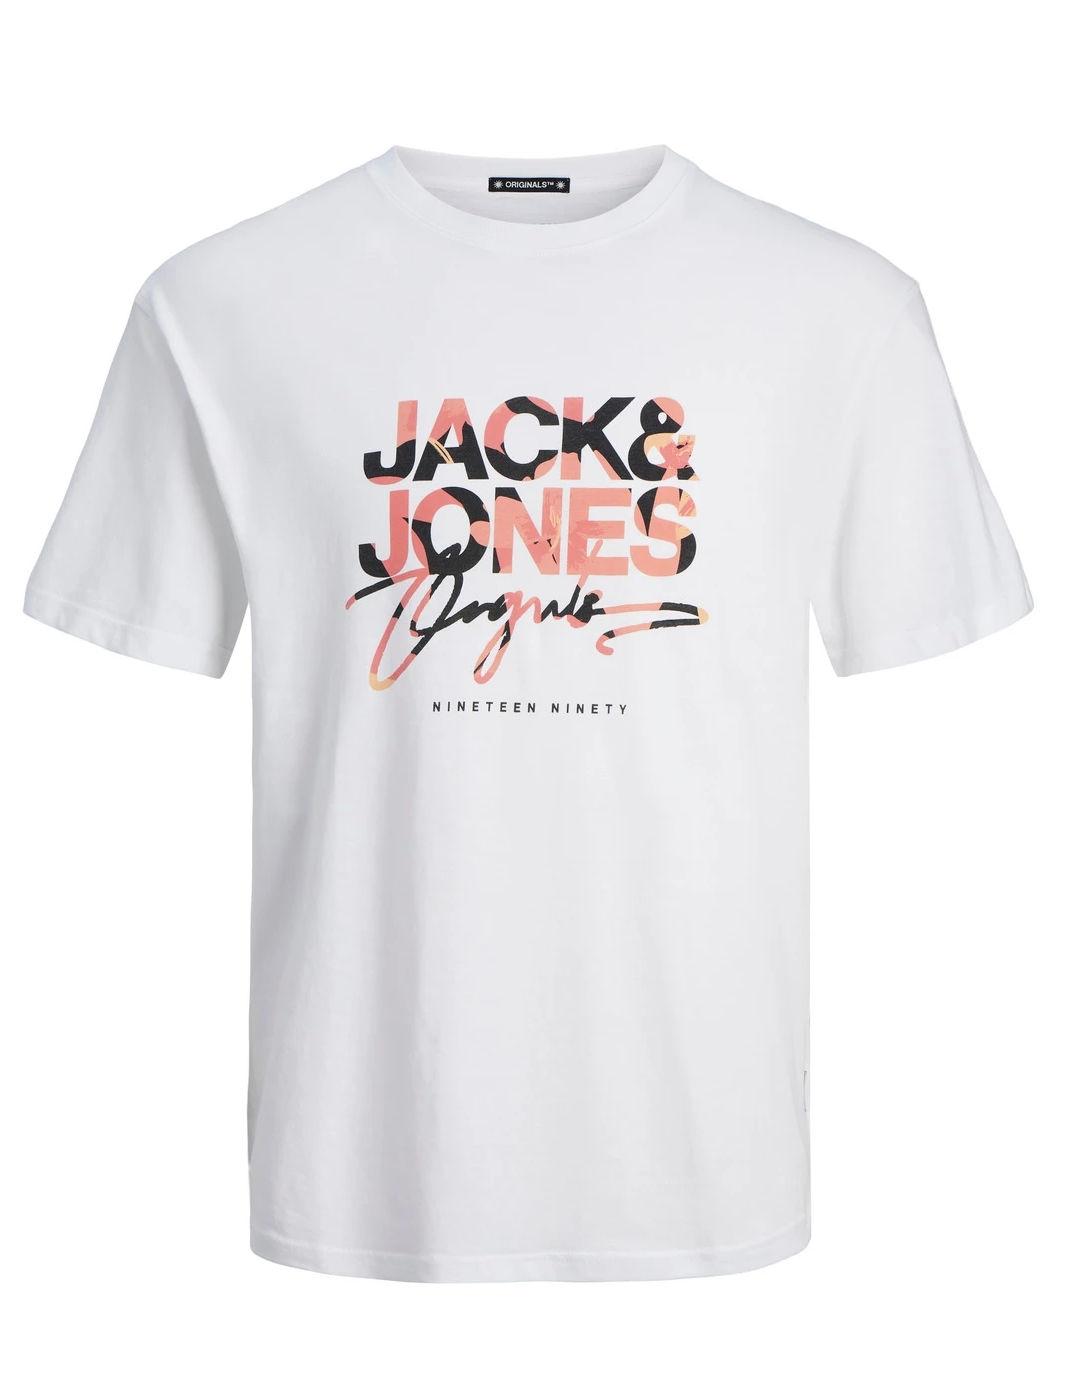 Camiseta Jack&Jones Junior Aruba blanco manga corta  niño